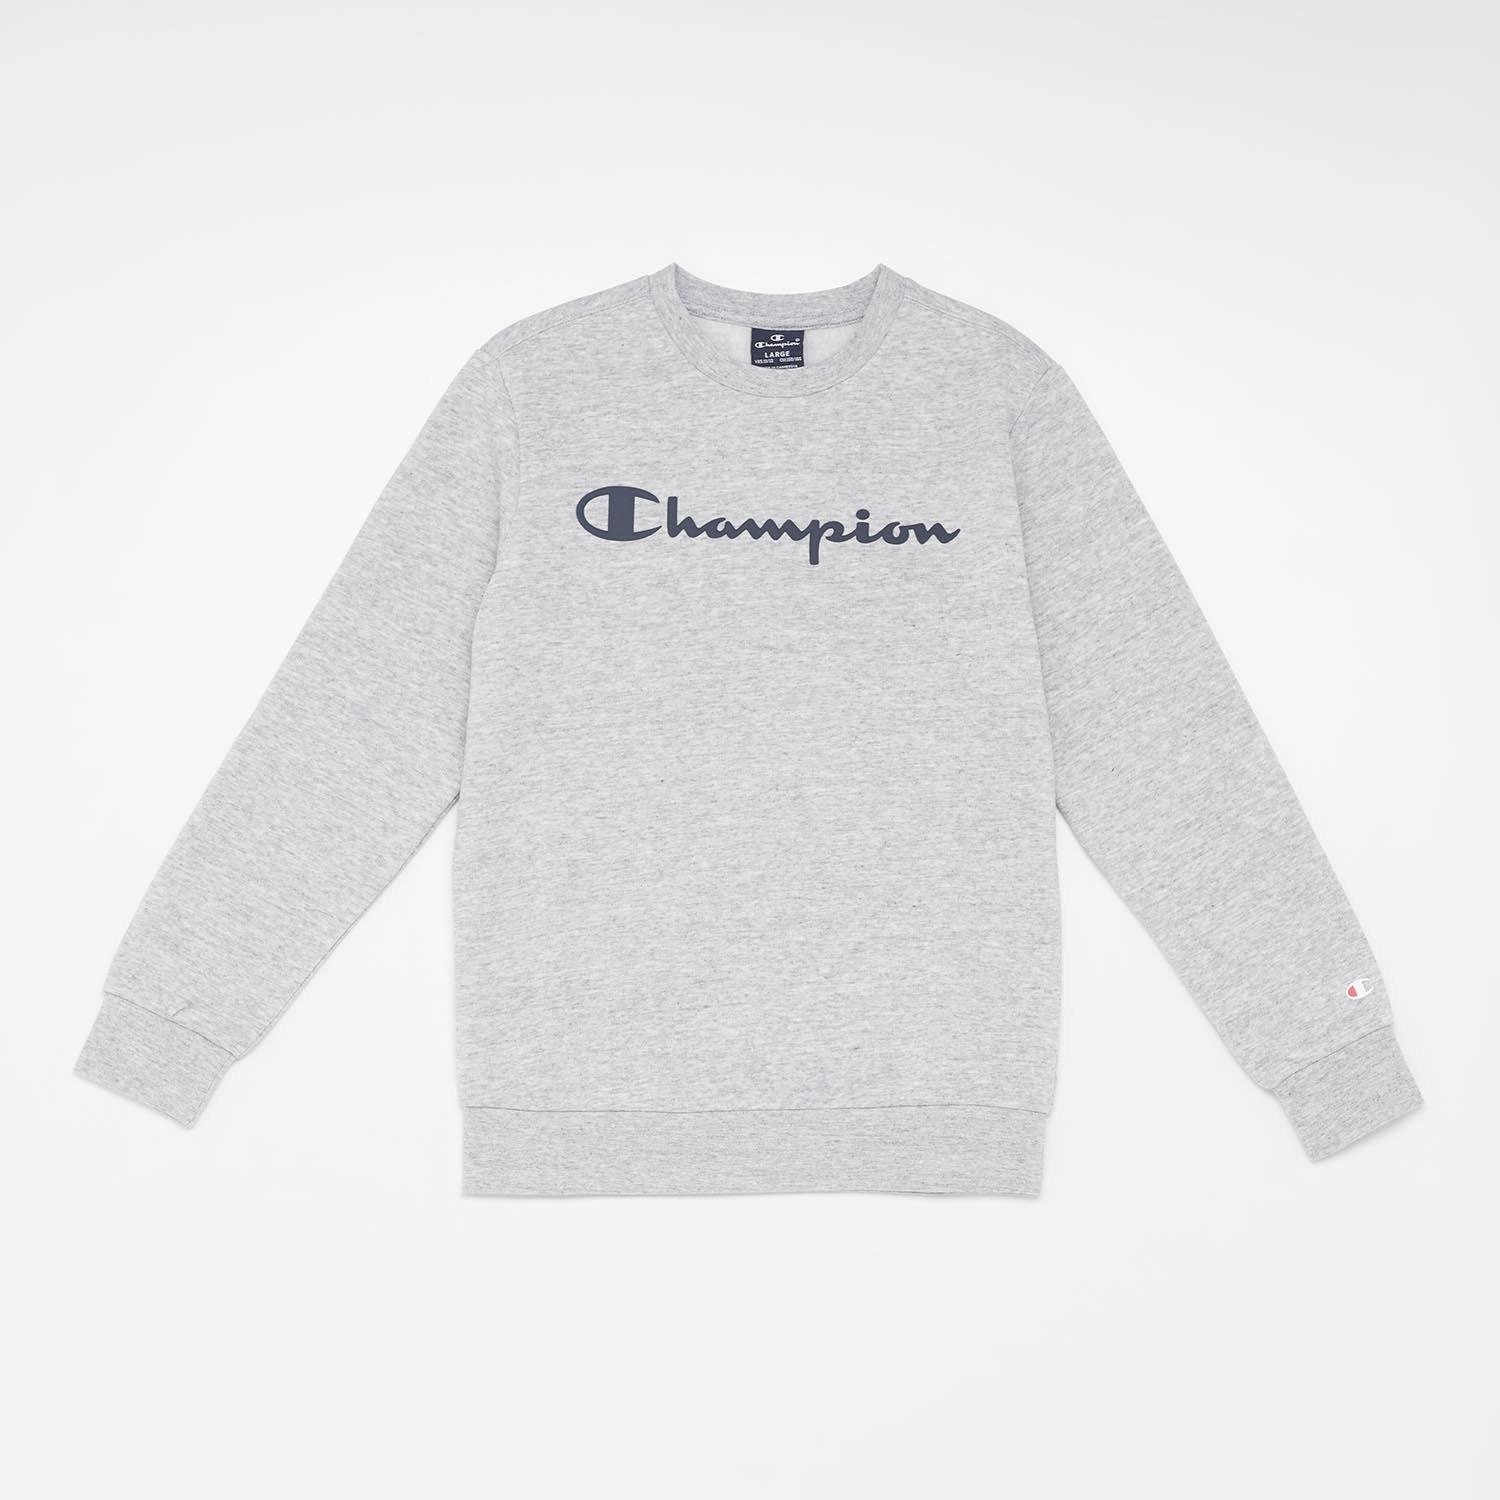 Champion Champion sweater grijs kinderen kinderen